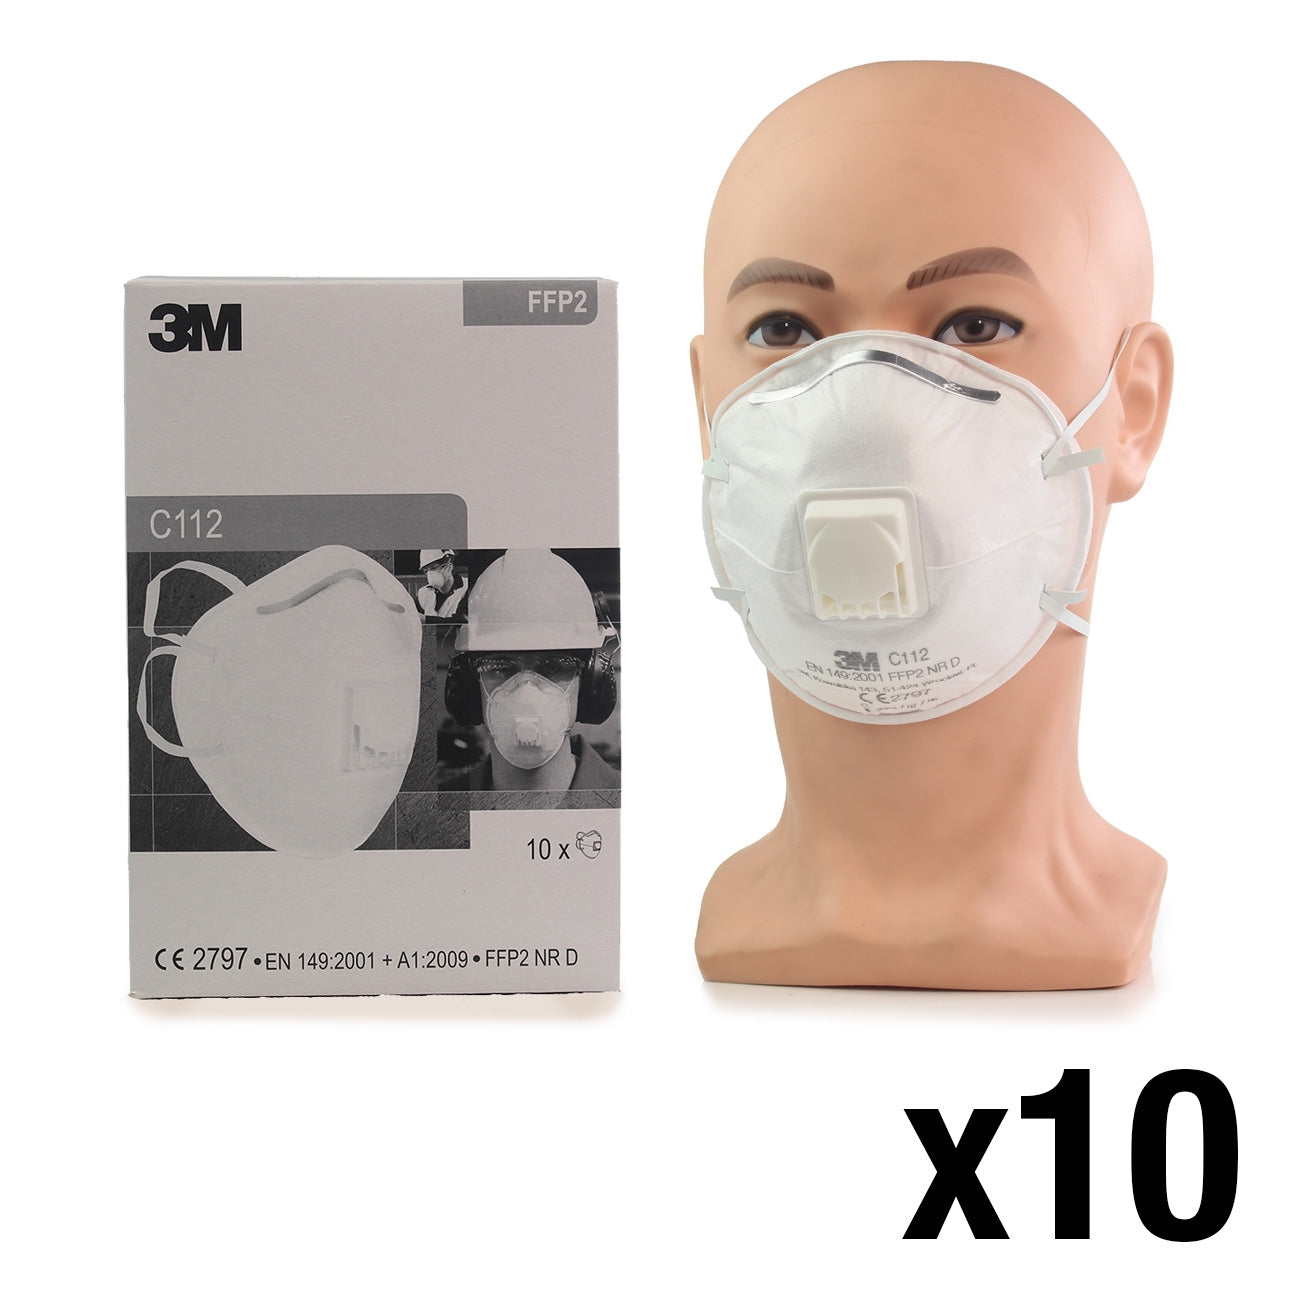 MIR Health FFP2 mask